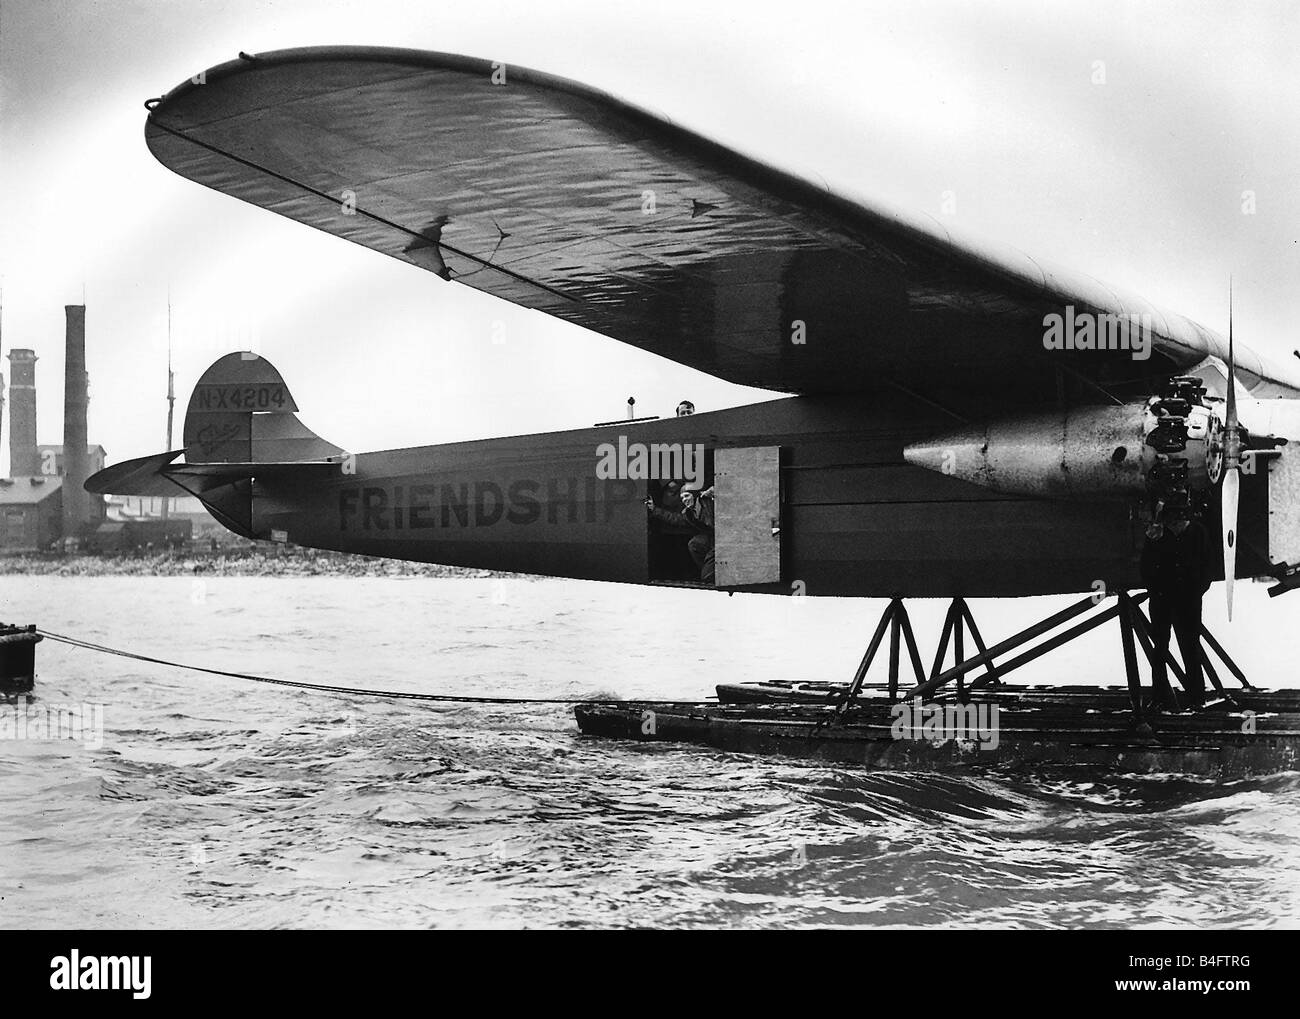 Das Atlantic Flugboot Freundschaft am Southampton 1928 Amelia Earhart wegweisende Flug über den Atlantik Stockfoto